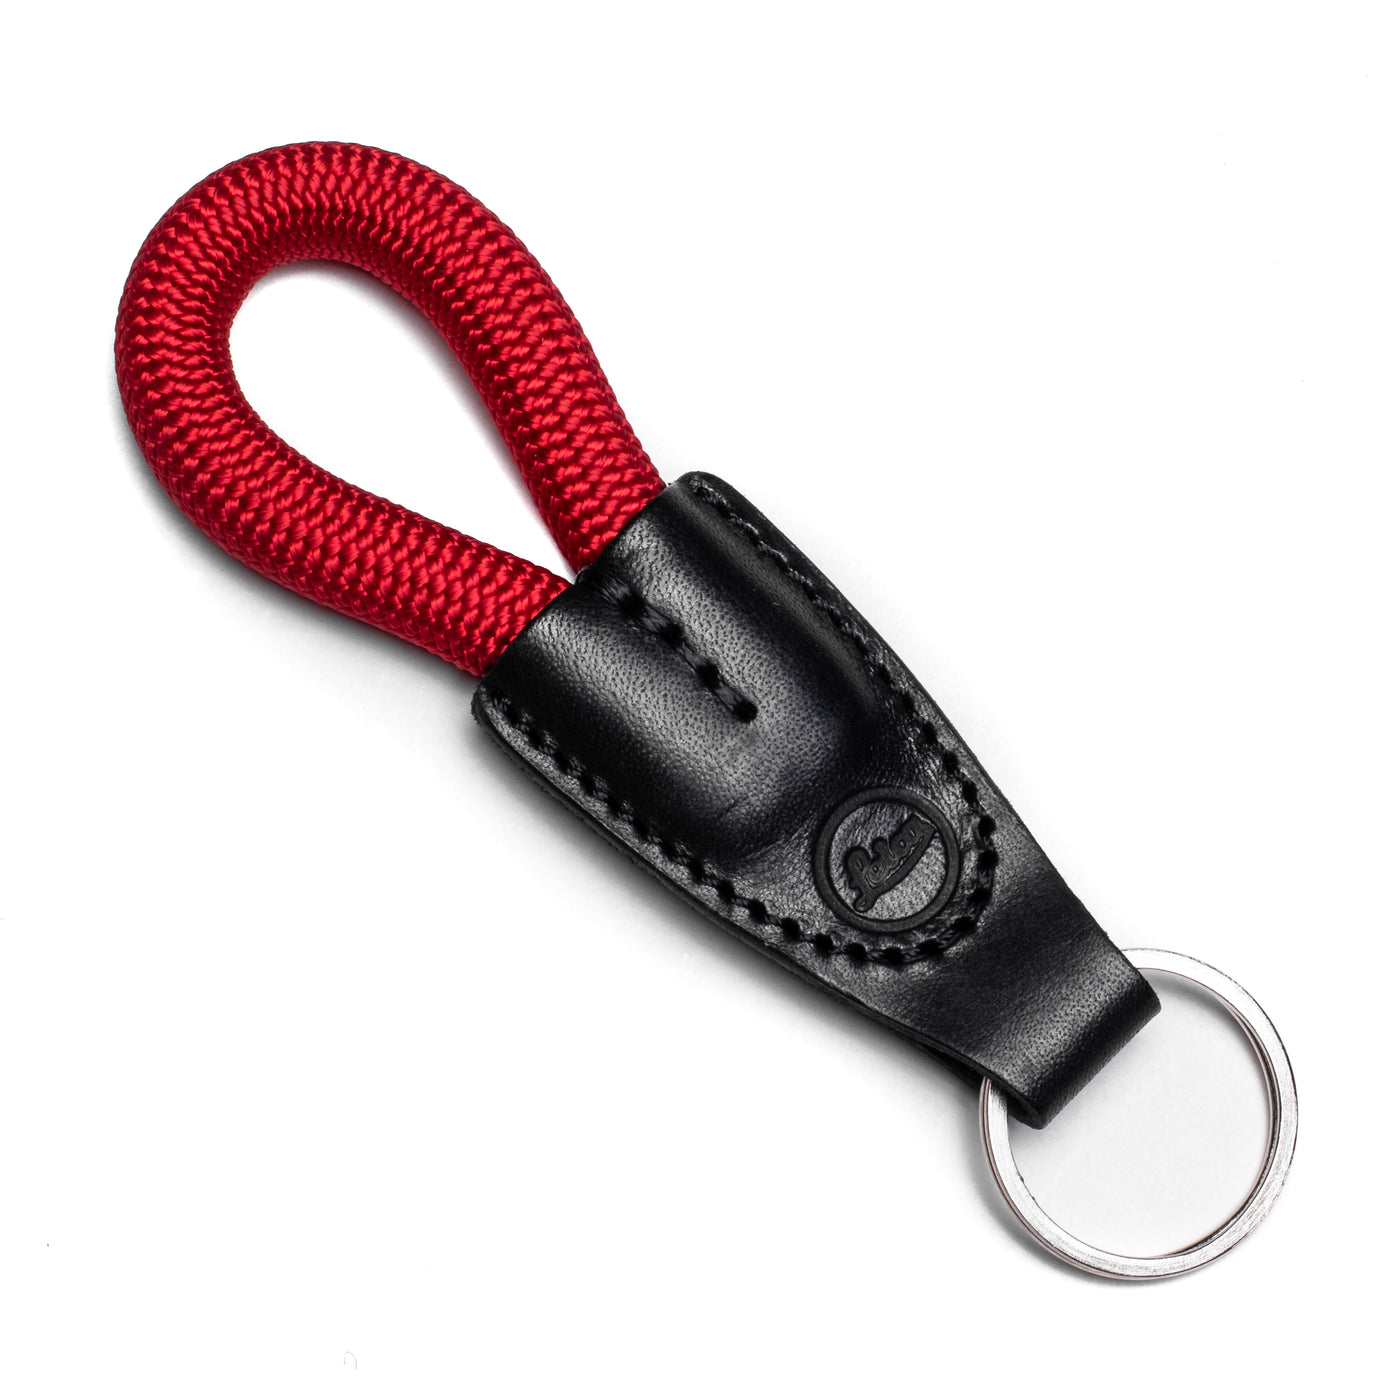 Leica Rope Key Chain